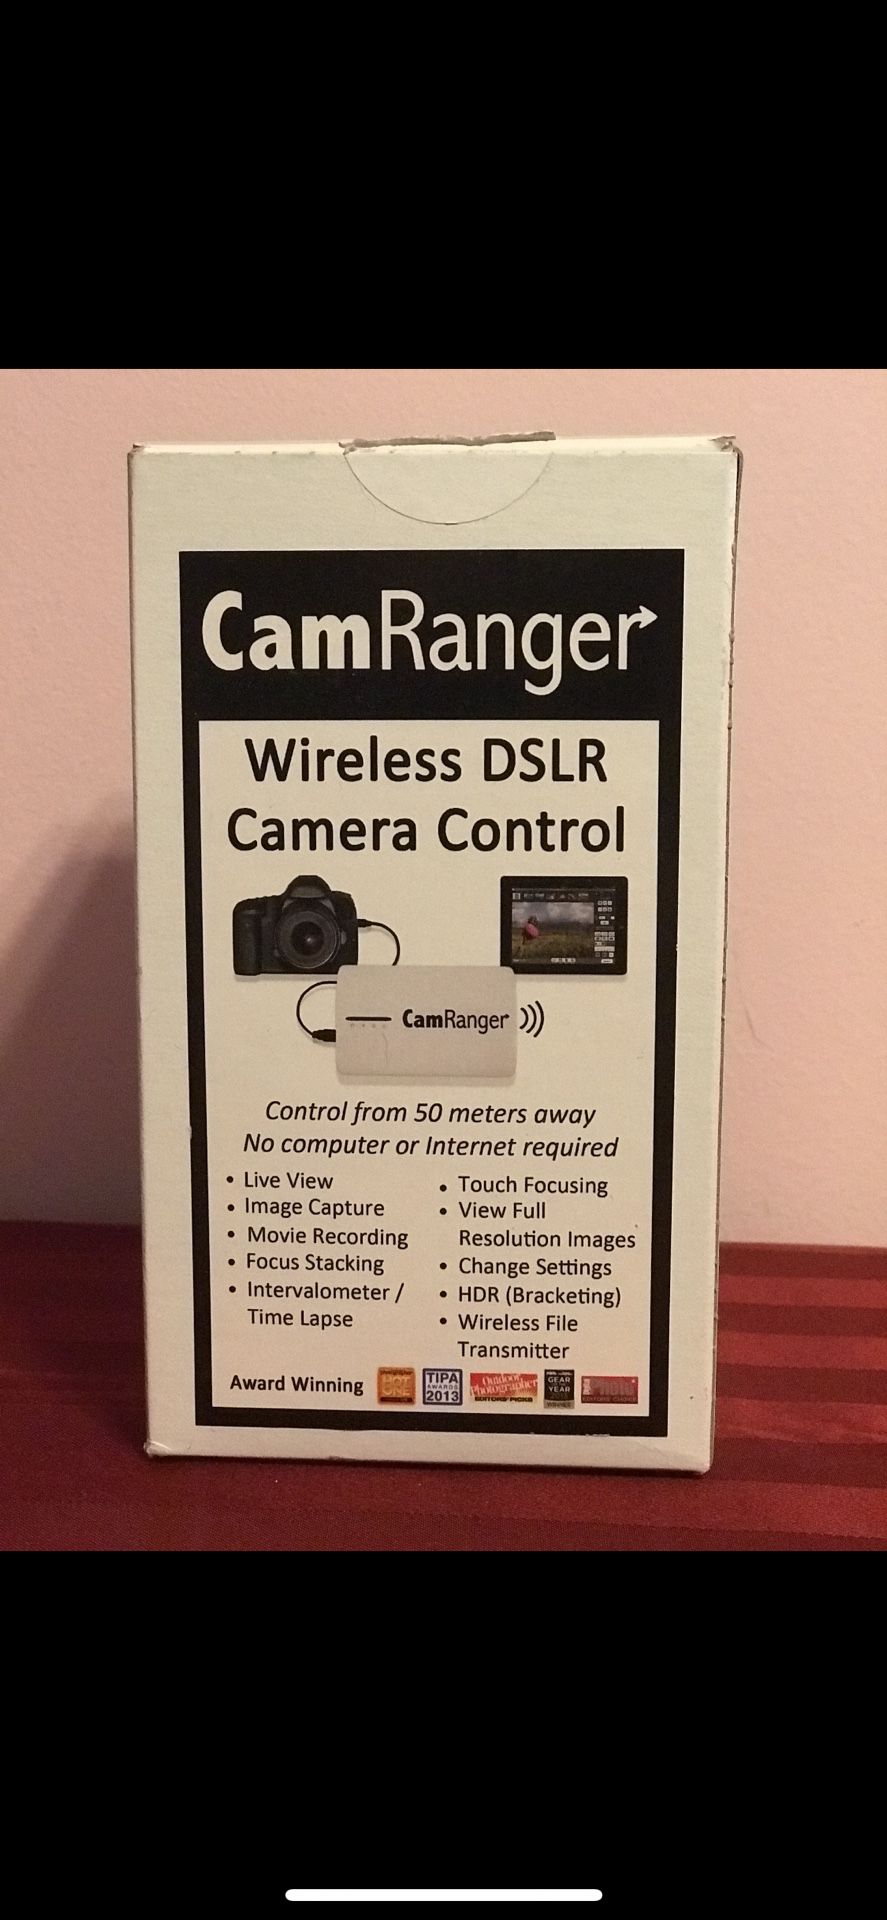 CamRanger wireless DSLR Camera Control